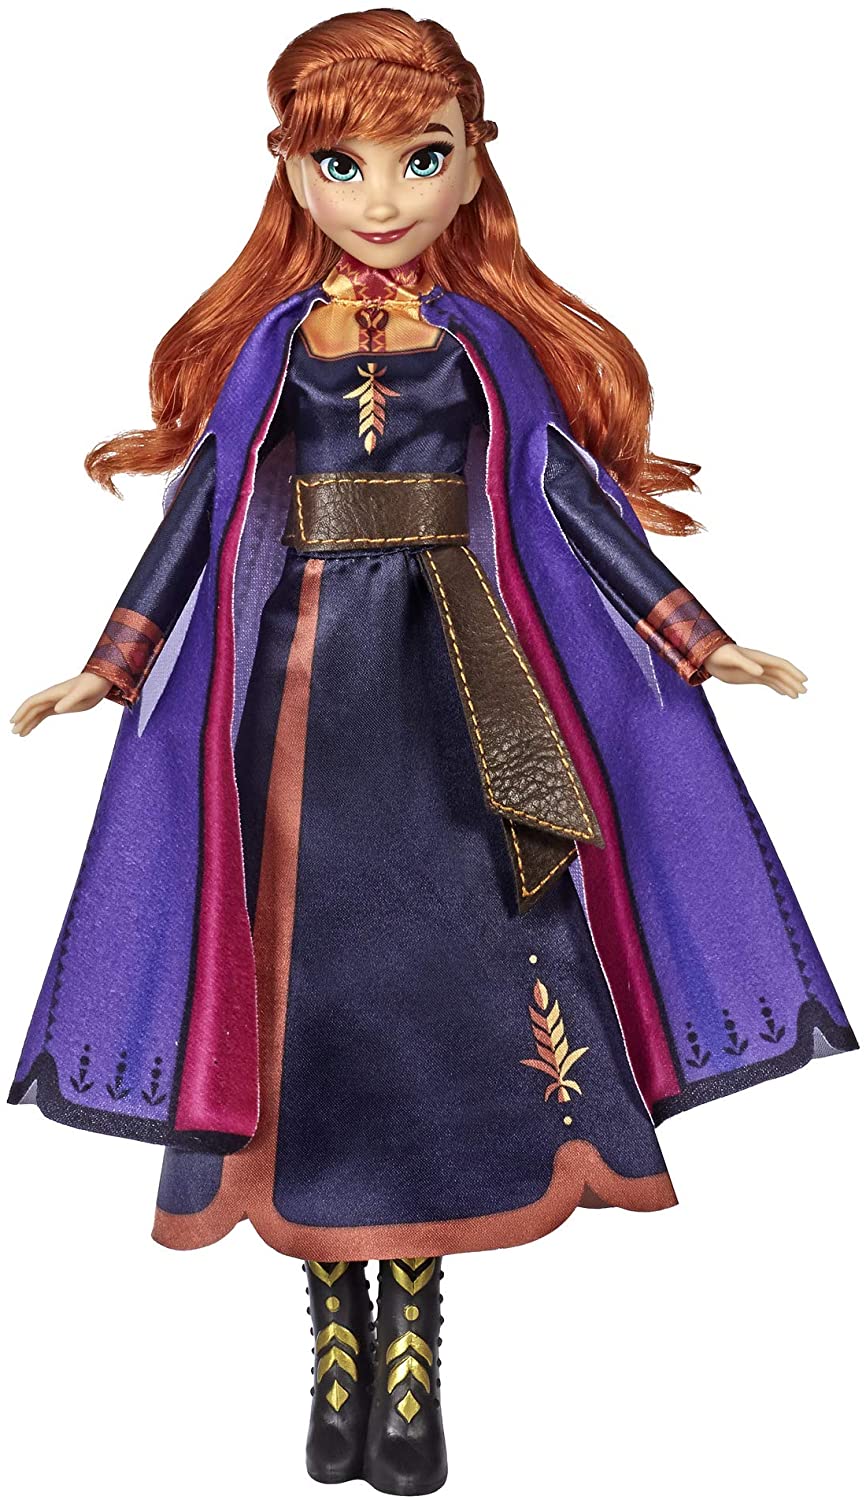 Disney Frozen II Singing Anna Fashion Doll Wearing a Purple Dress